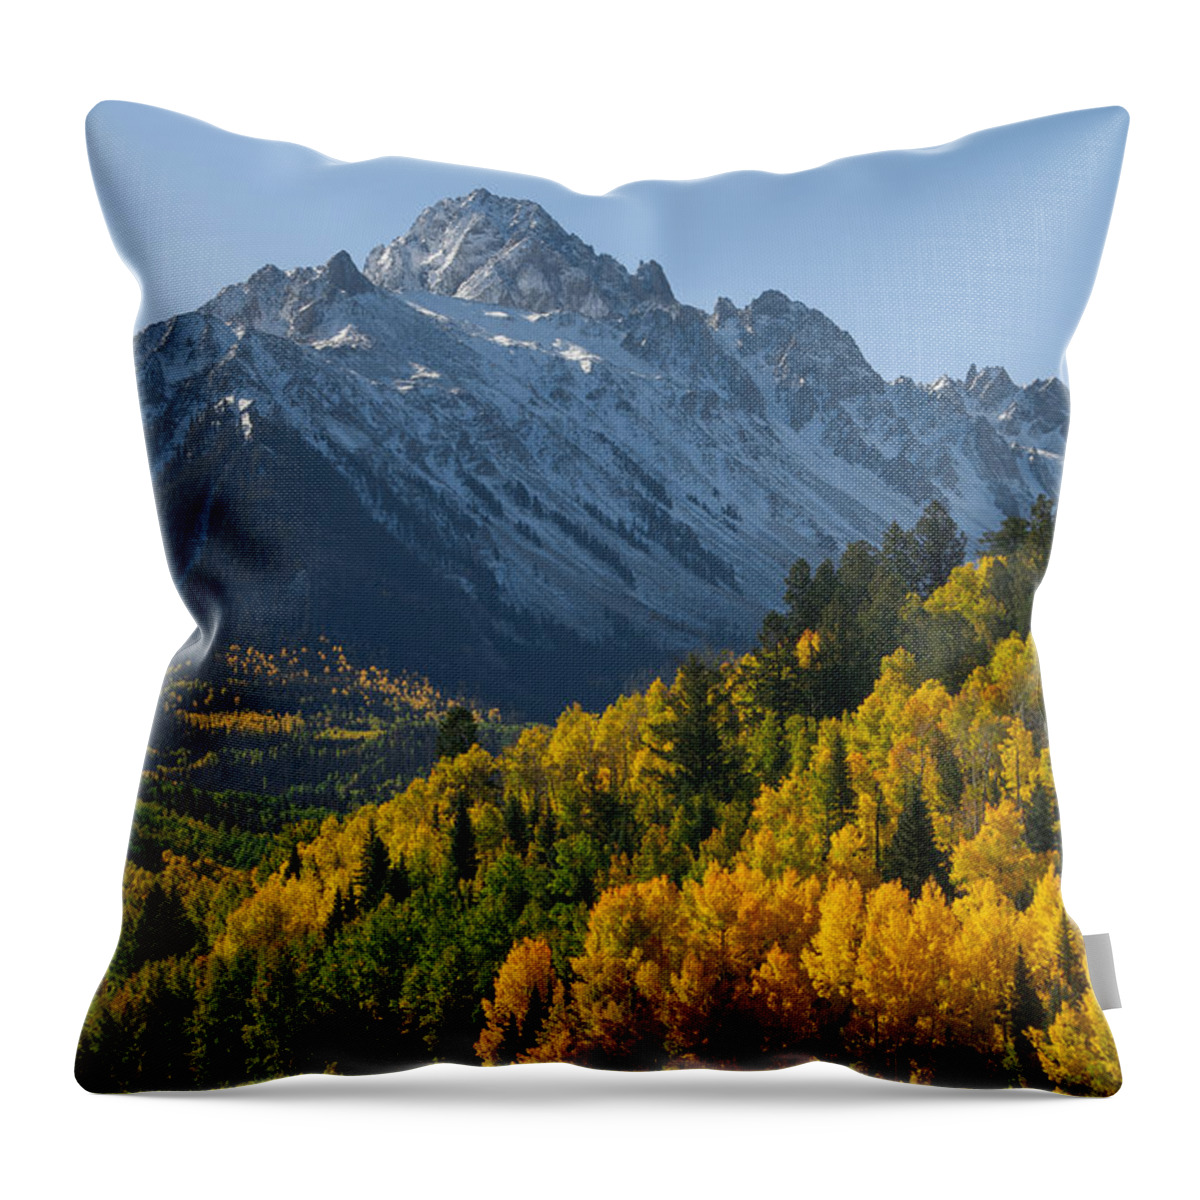 Sneffels Throw Pillow featuring the photograph Colorado 14er Mt. Sneffels by Aaron Spong